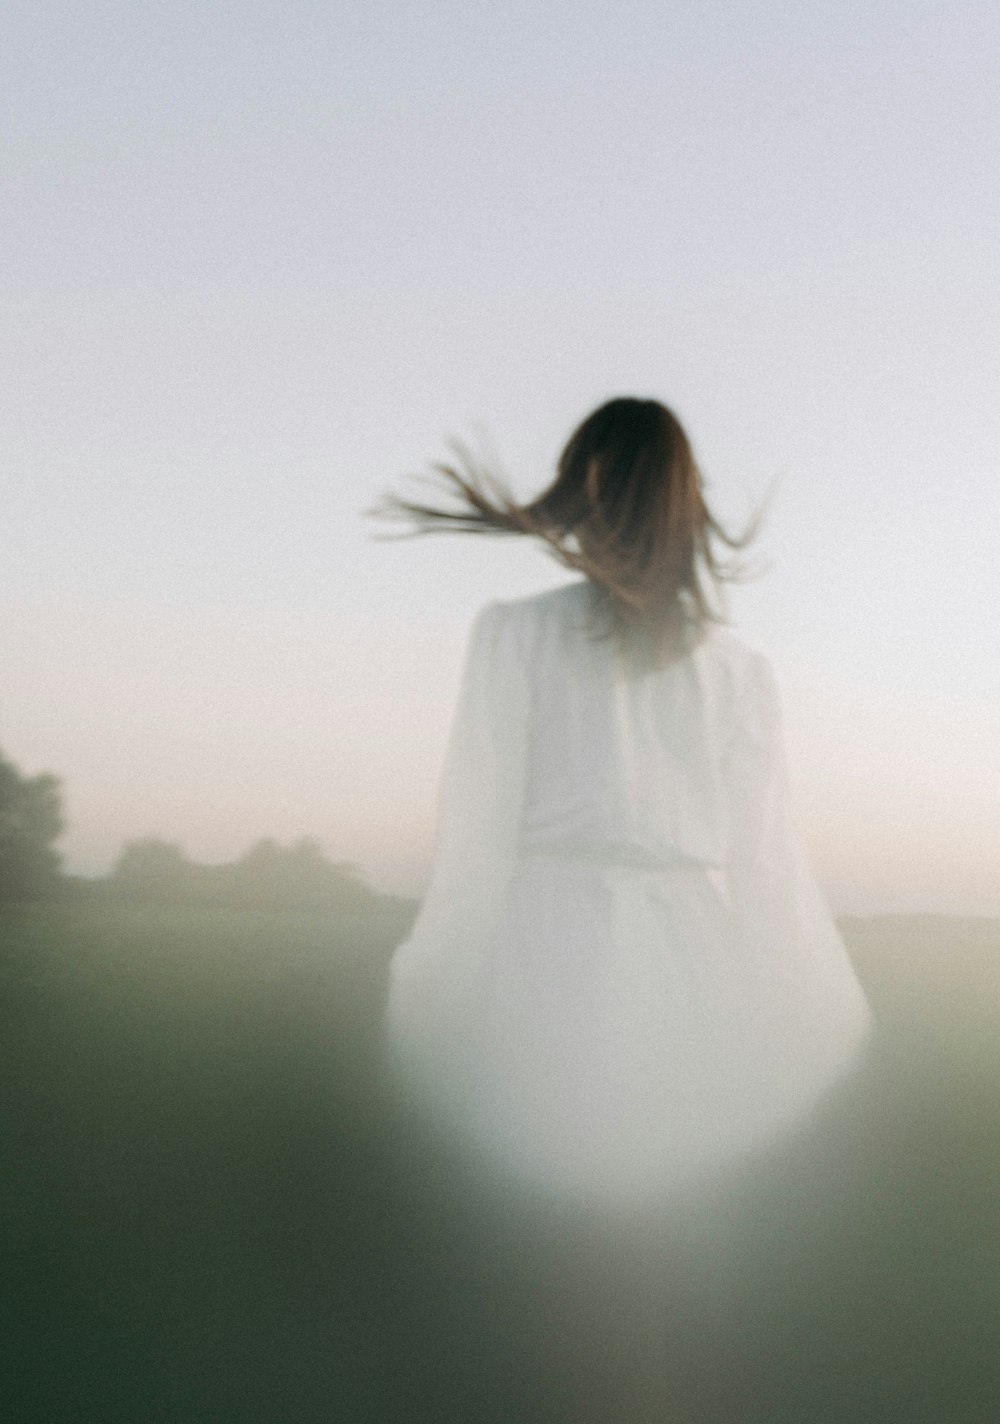 a woman in a white dress walking through a field